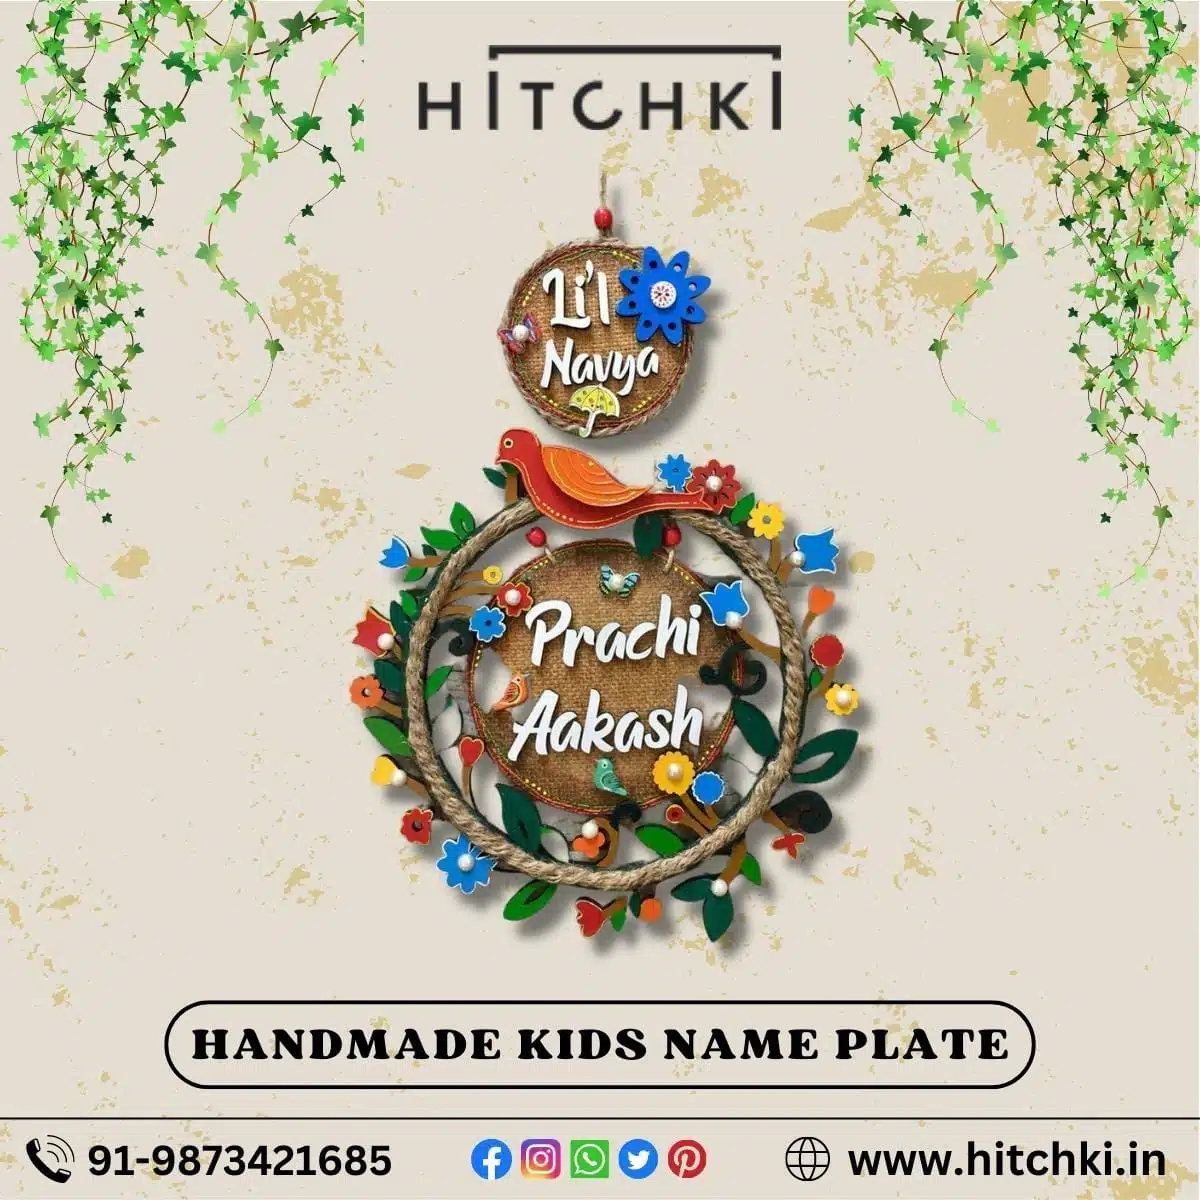 New Kids Handmade Name Plate For Home Online